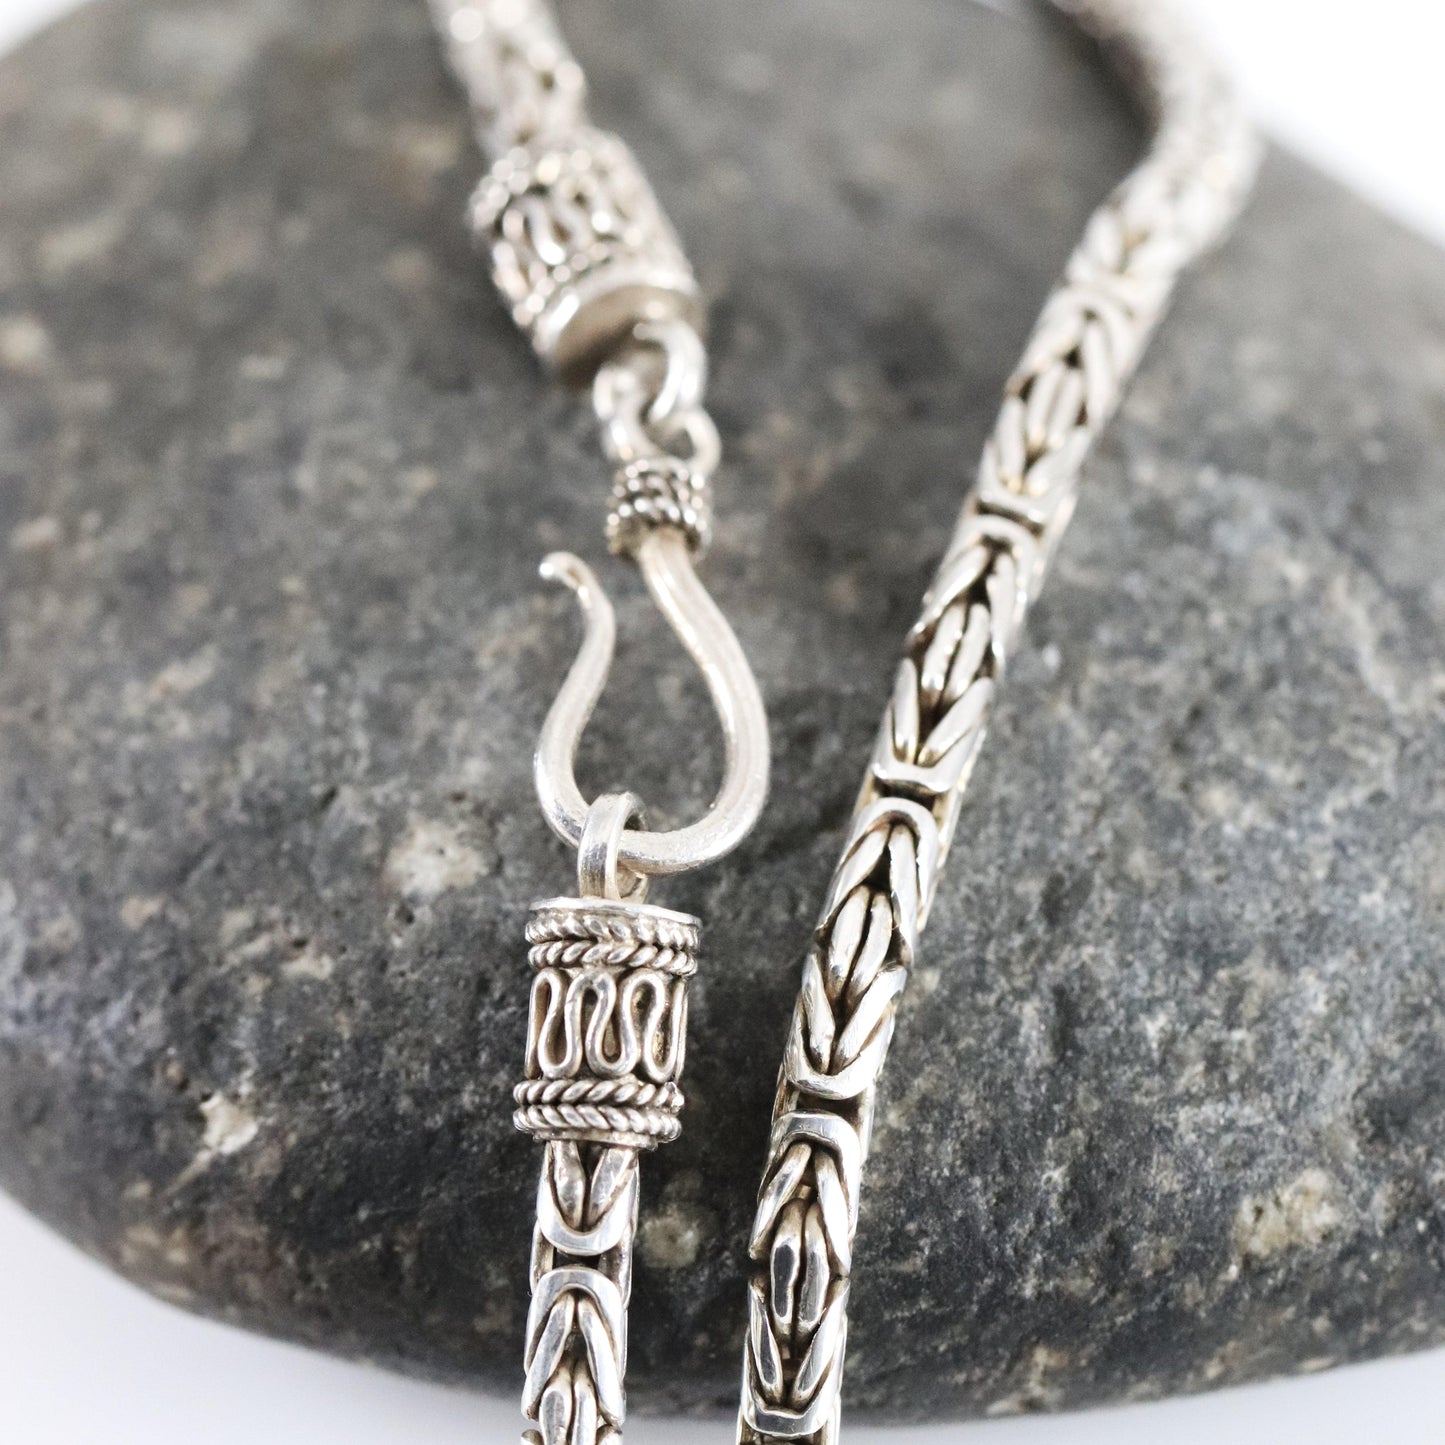 Vintage Silver Jewelry | Byzantine Chain Link Necklace 19.5" 3mm - Carmel Fine Silver Jewelry